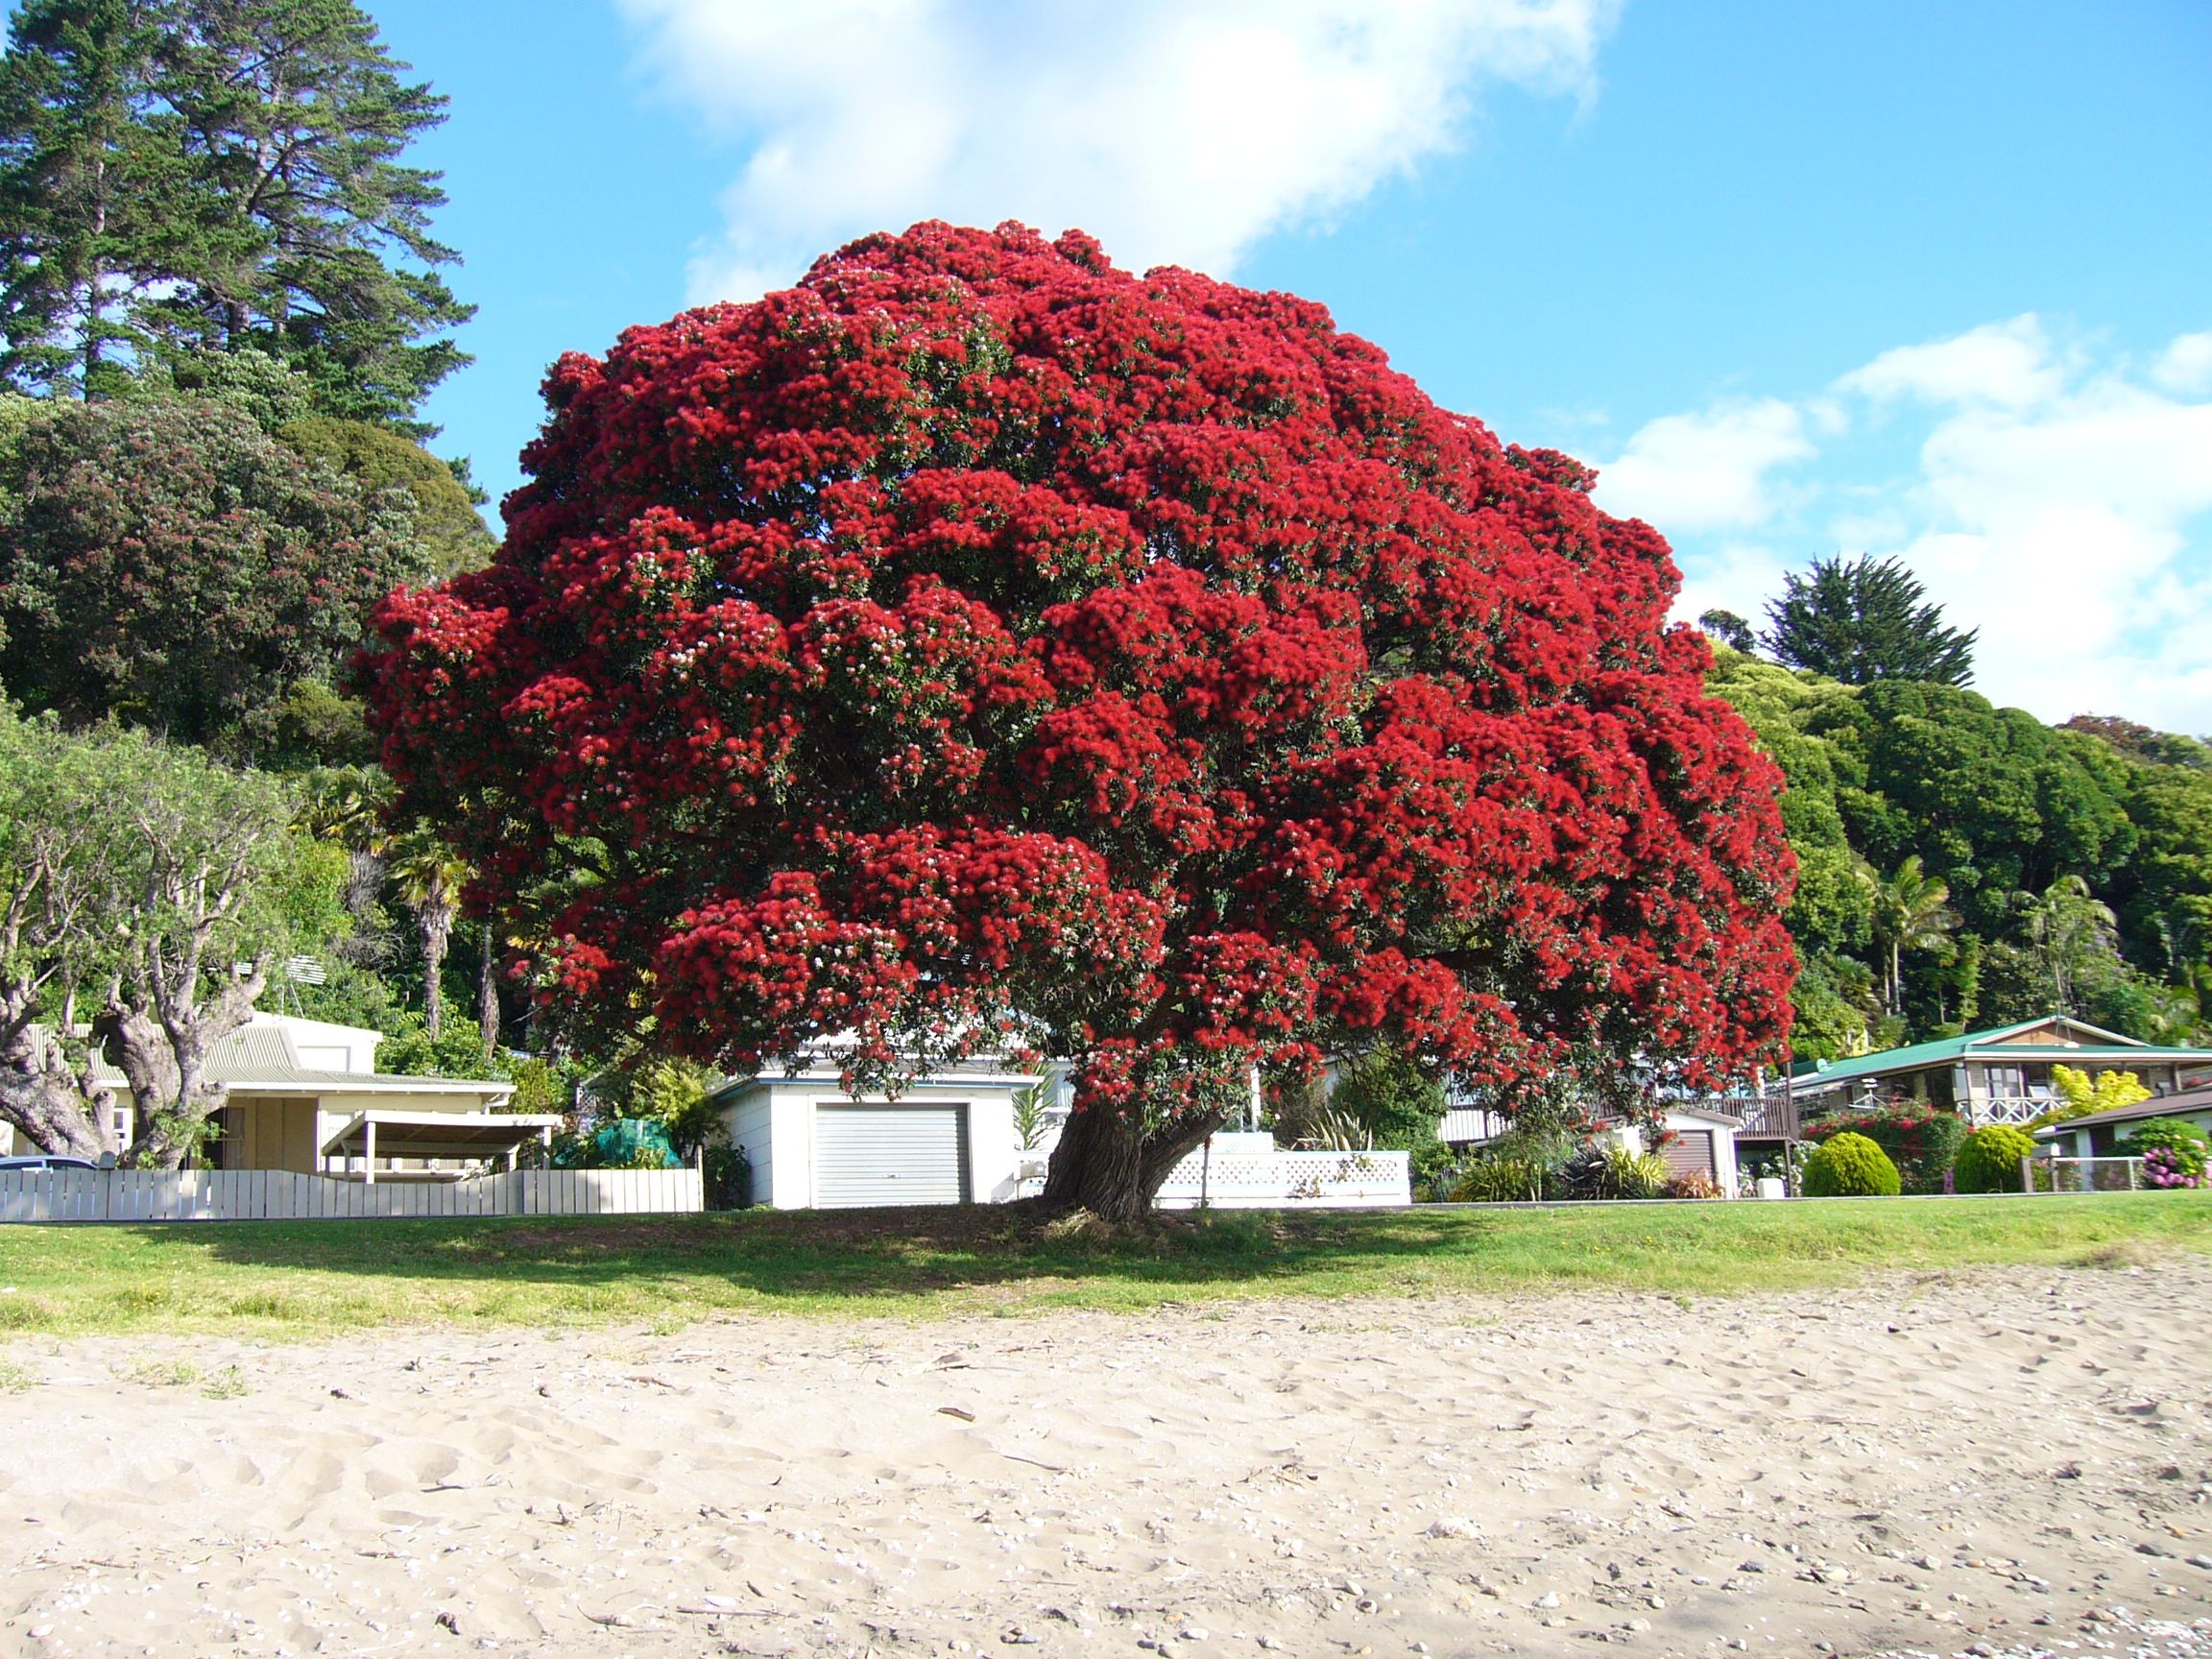 10 Things I Love About New Zealand | Christmas tree, Kiwiana and Wander